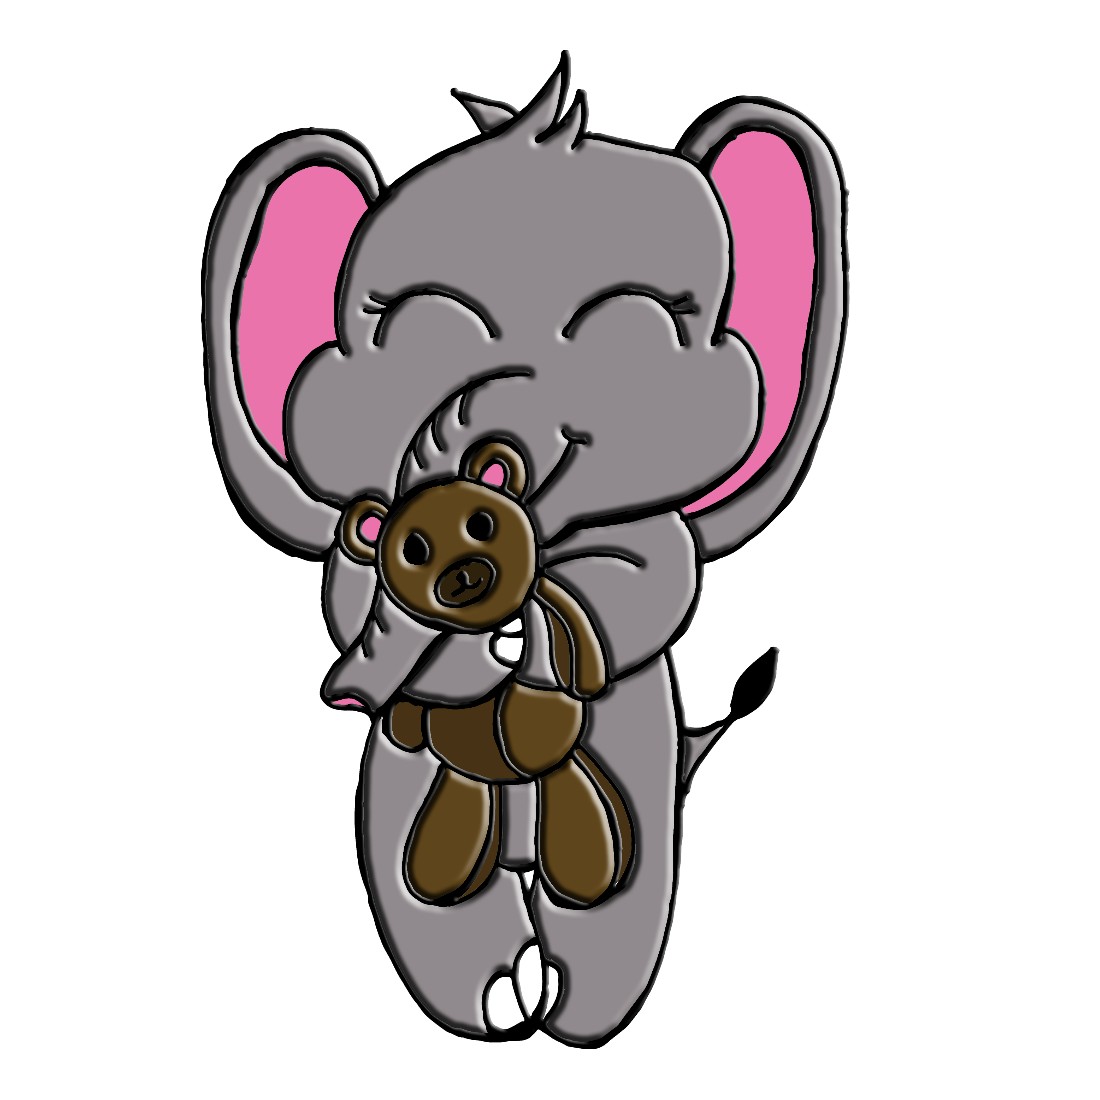 Cartoon elephant hugging a stuffed animal.